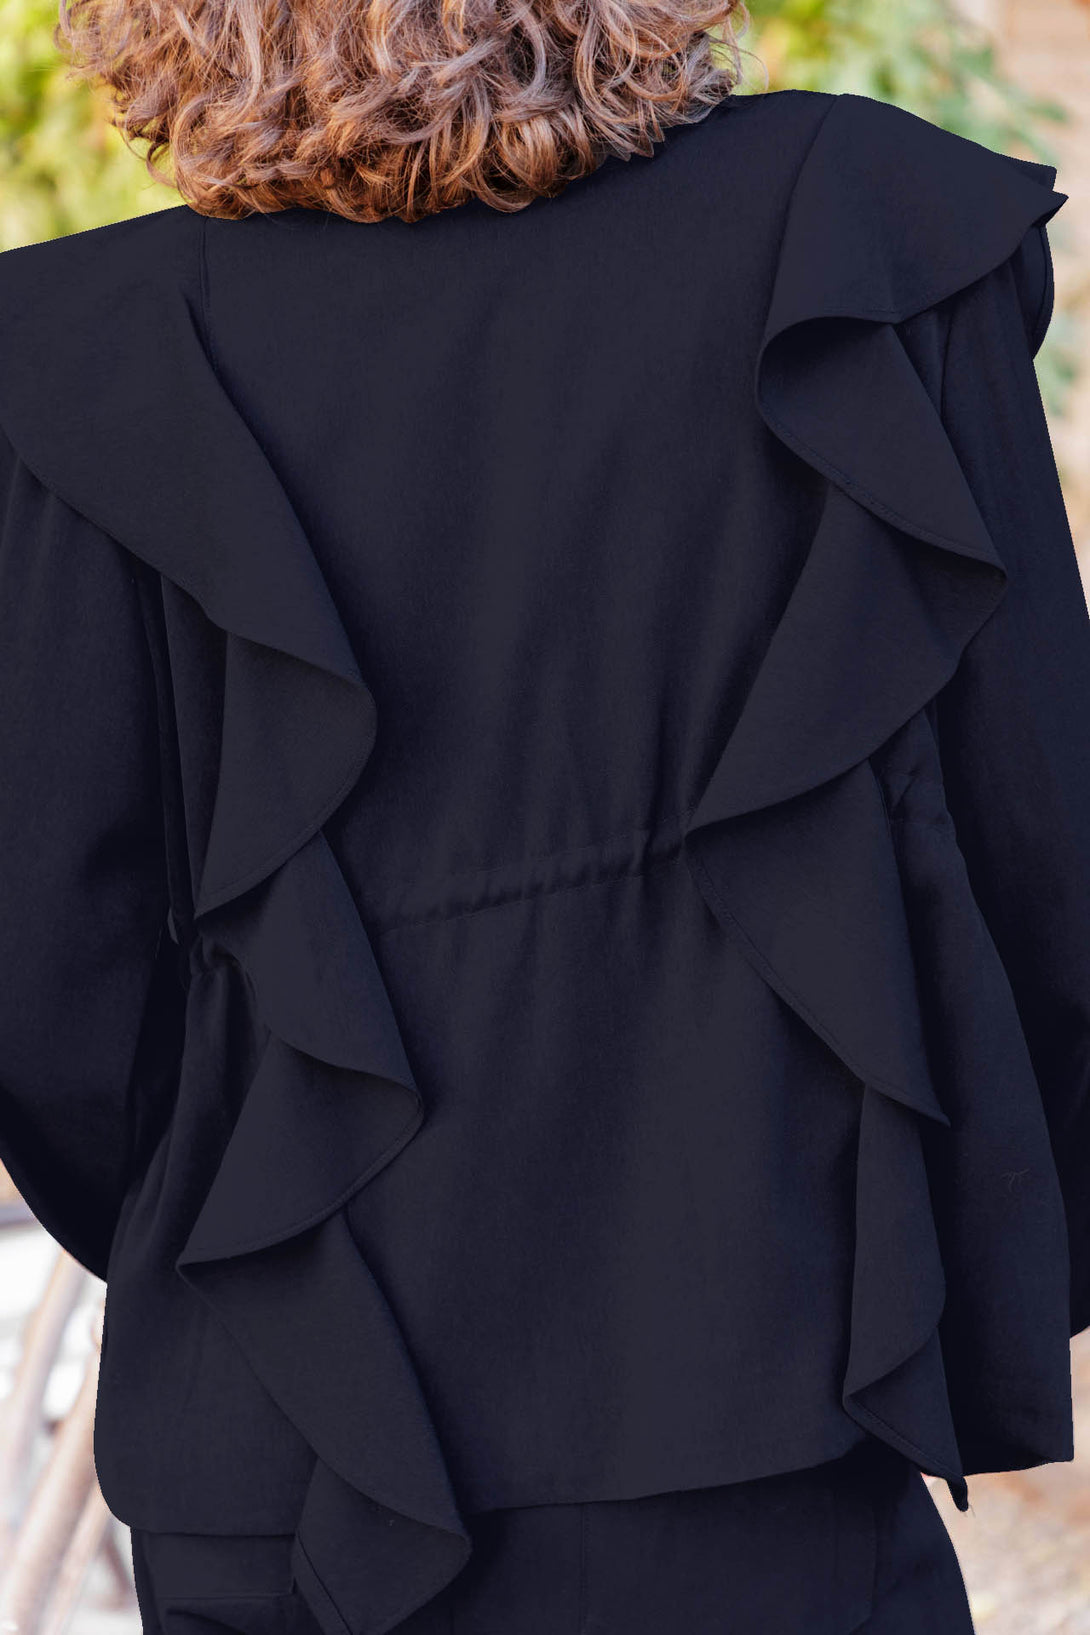 black designer jacket, HT 360 Collective, black blazer coat womens,